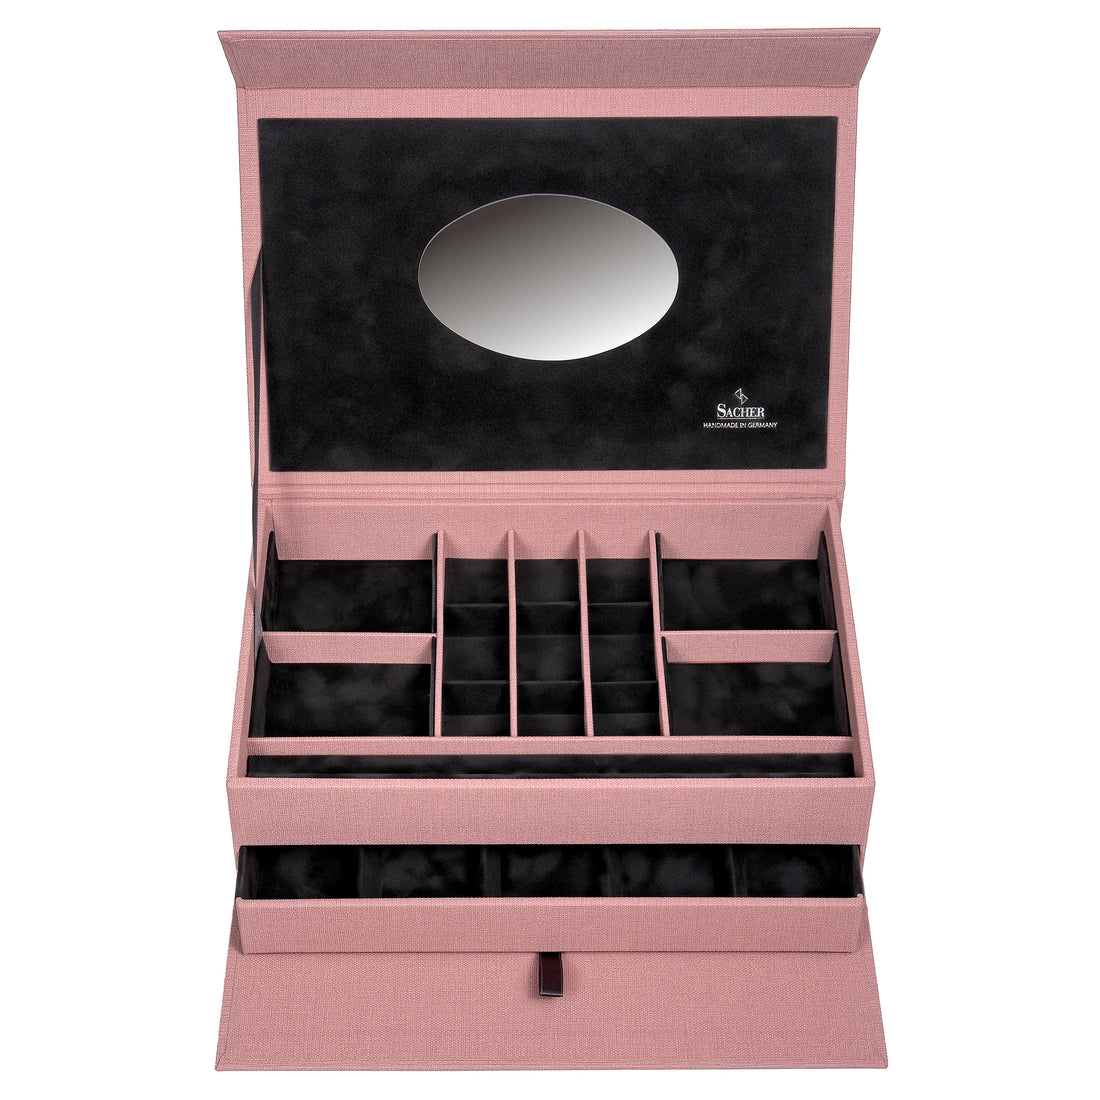 Schmuckbox pastello / rosa – Manufaktur SACHER 1846 | Offizieller Store